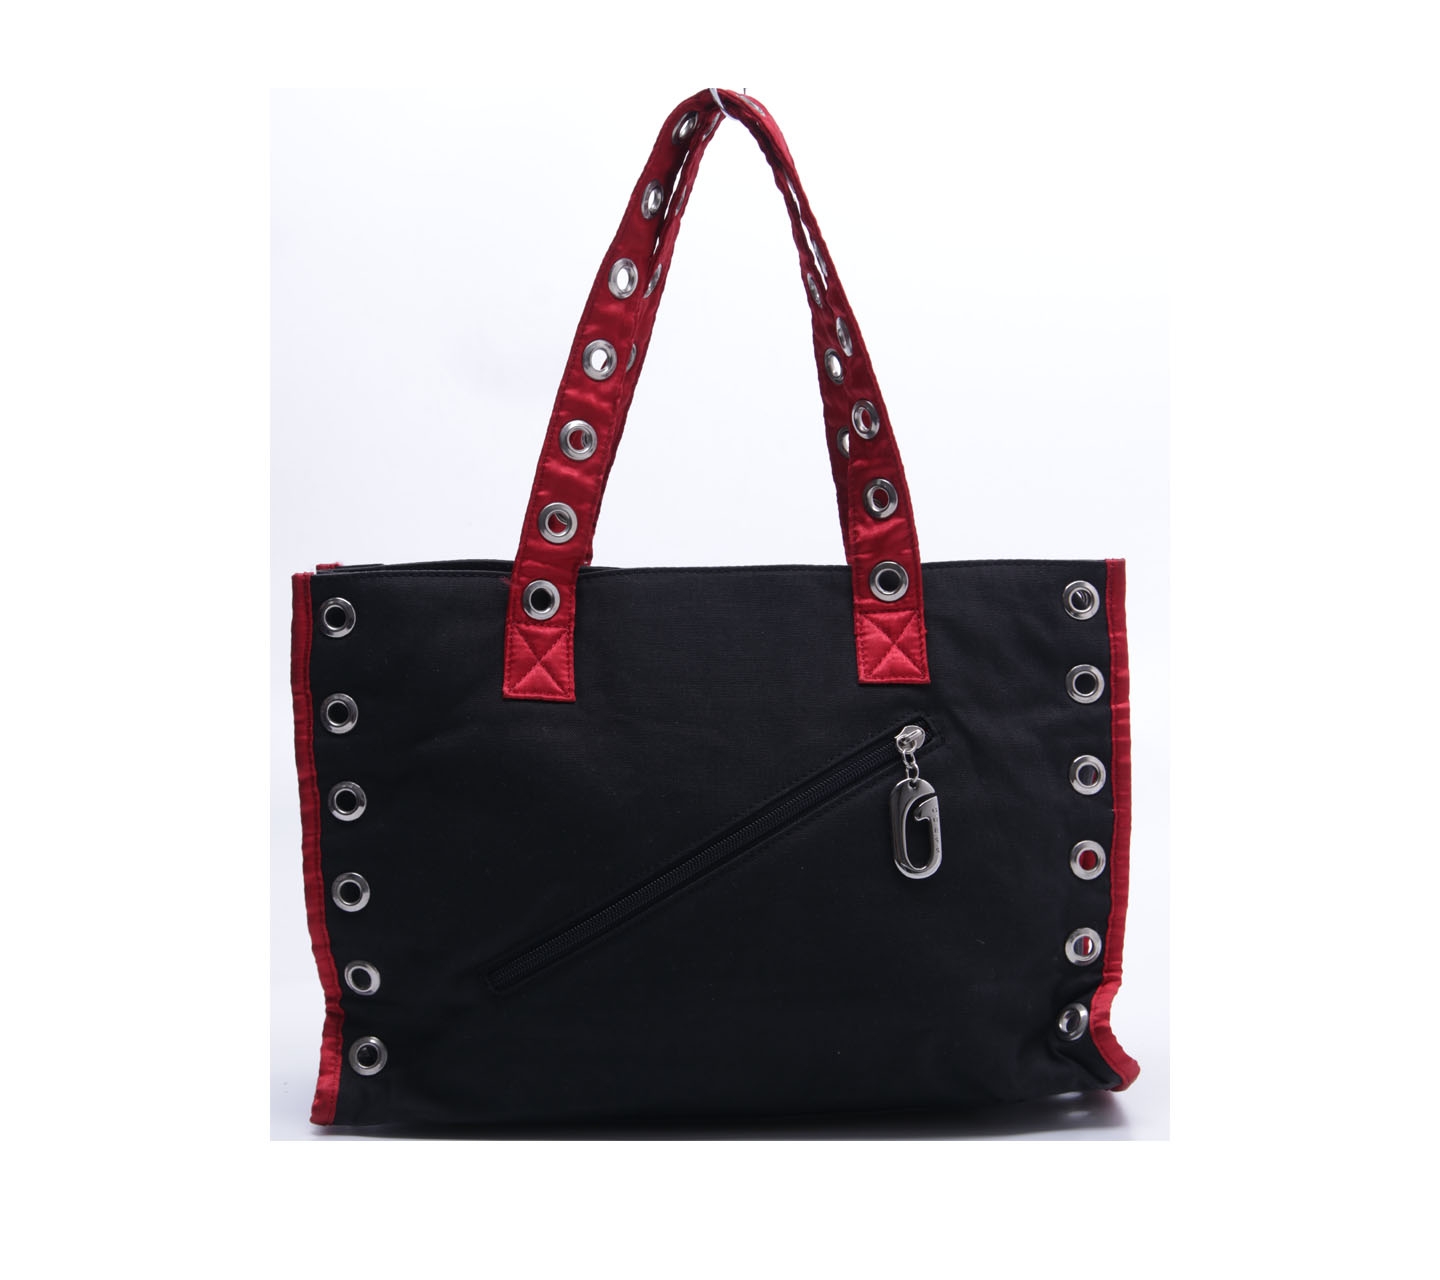 Guess Black & Red Handbag